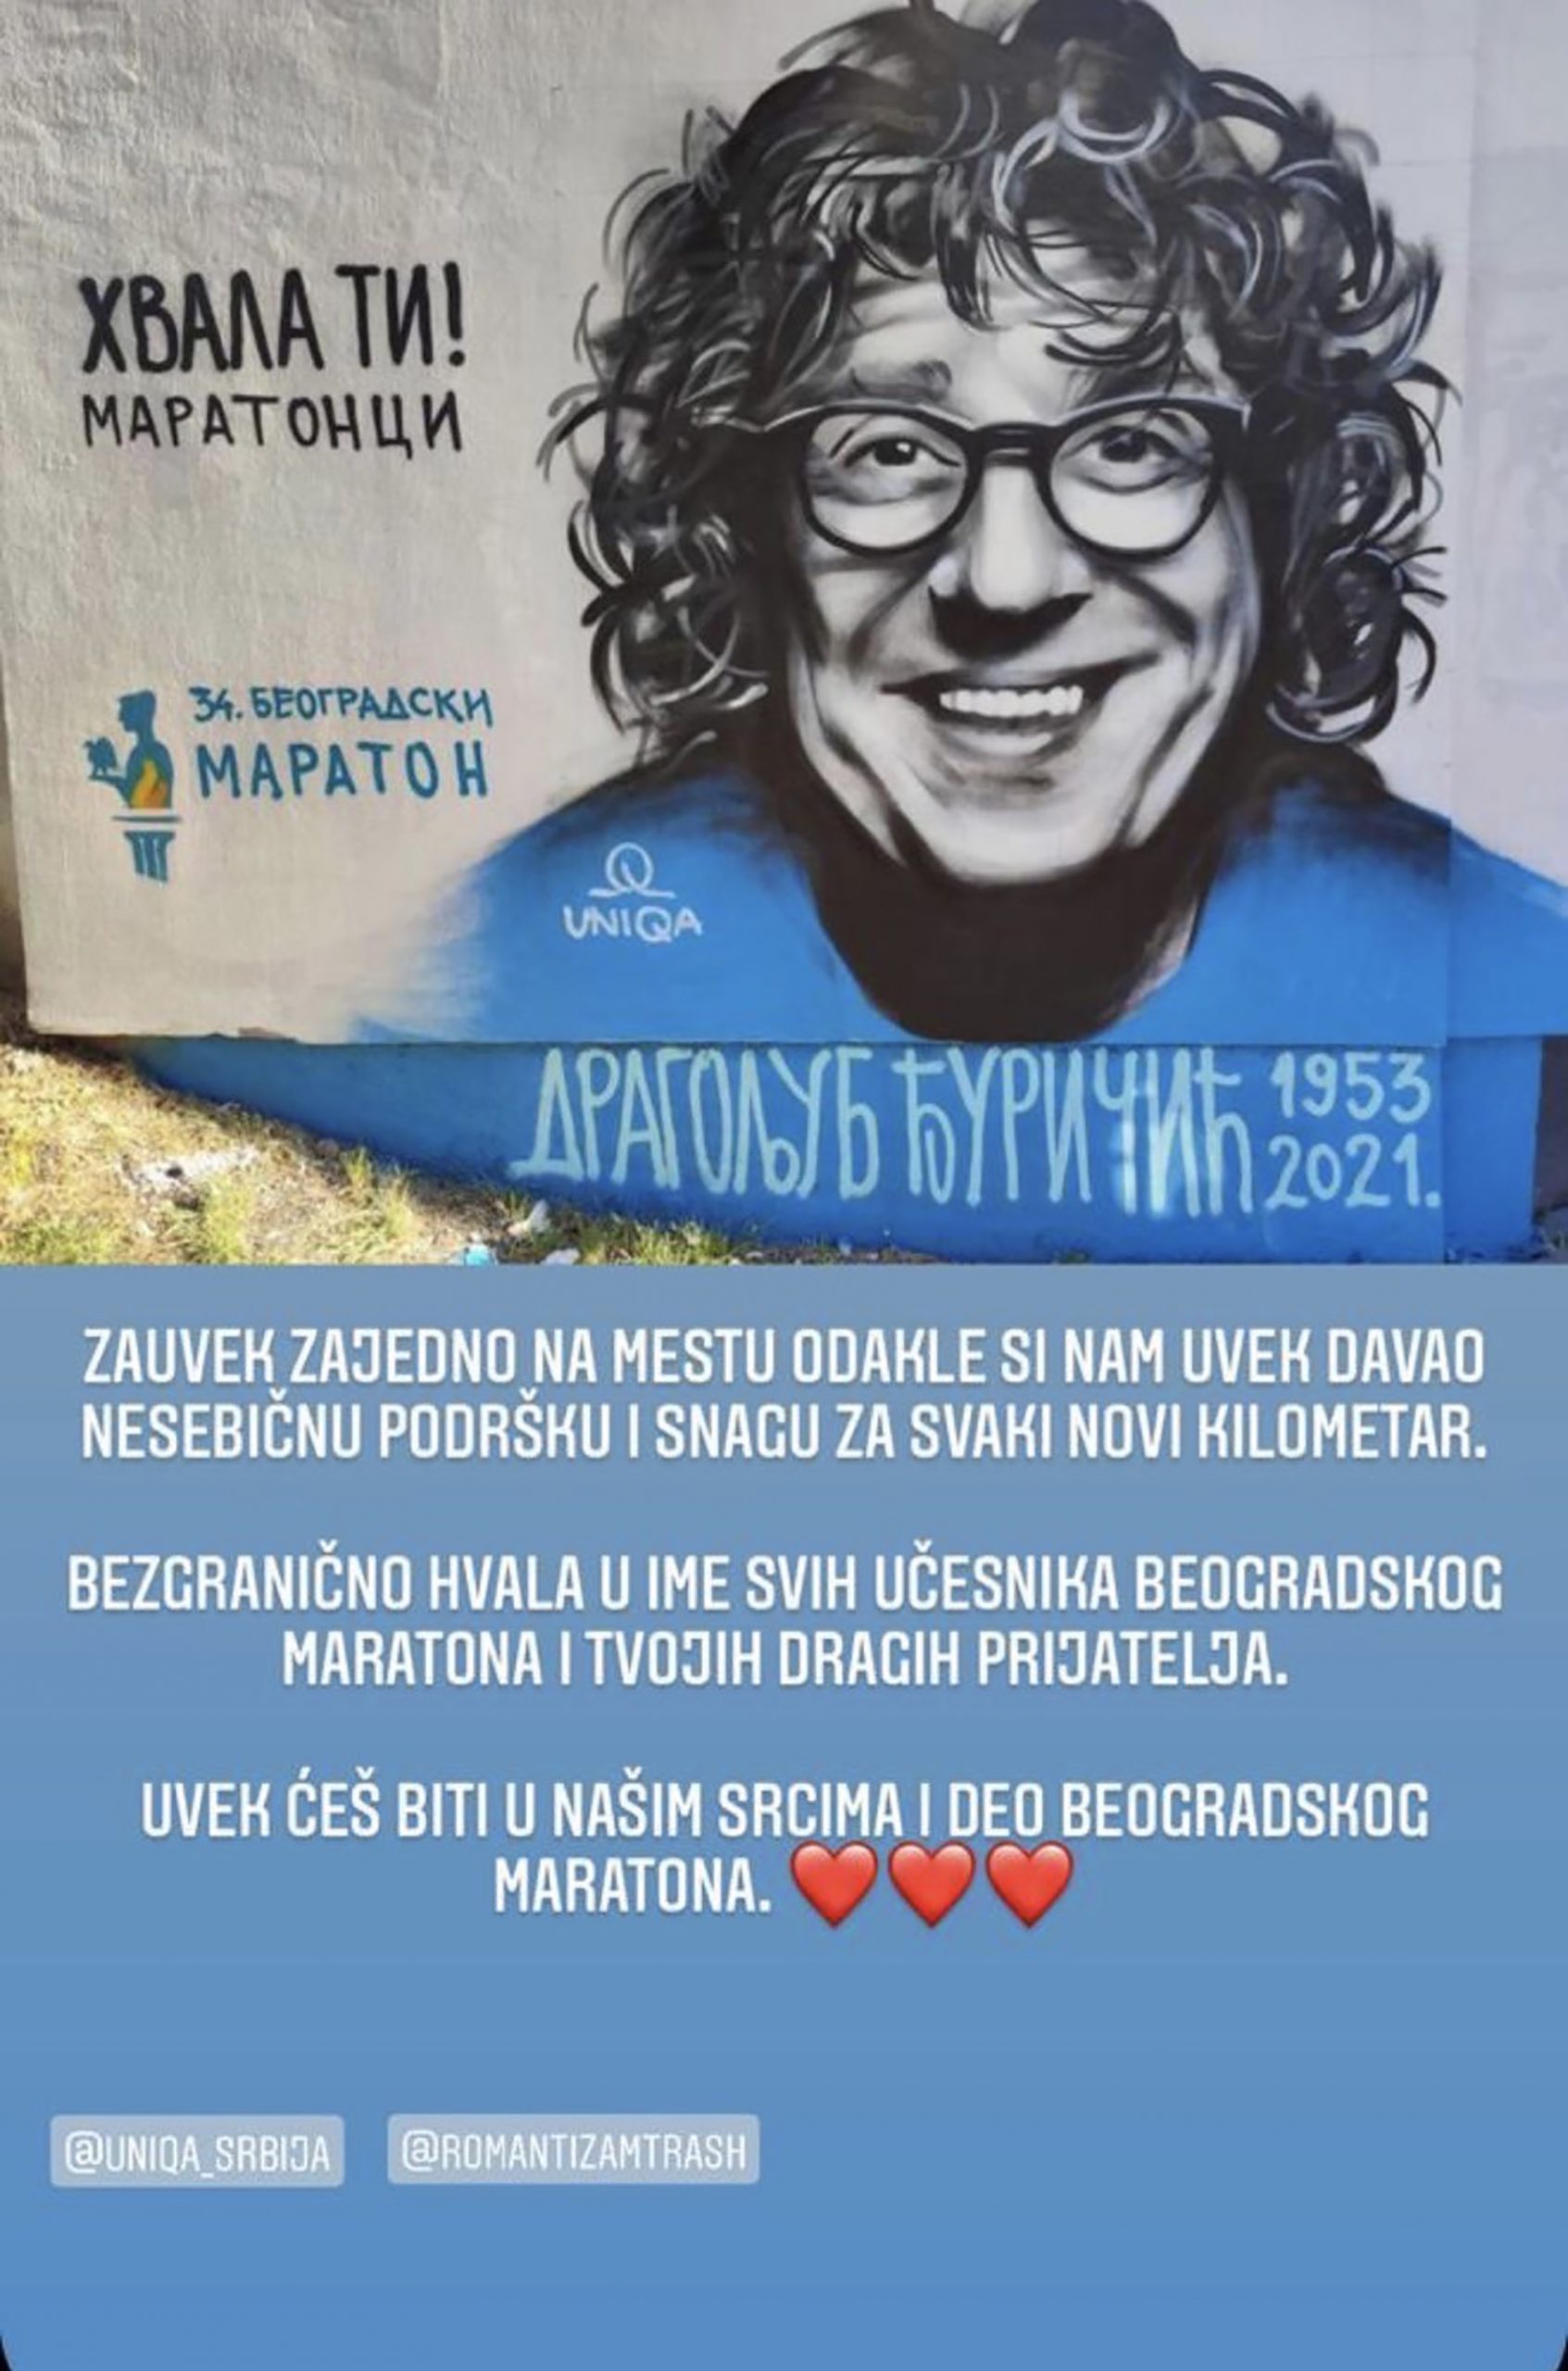 Dragoljub Đuričić mural, Beogradski maraton